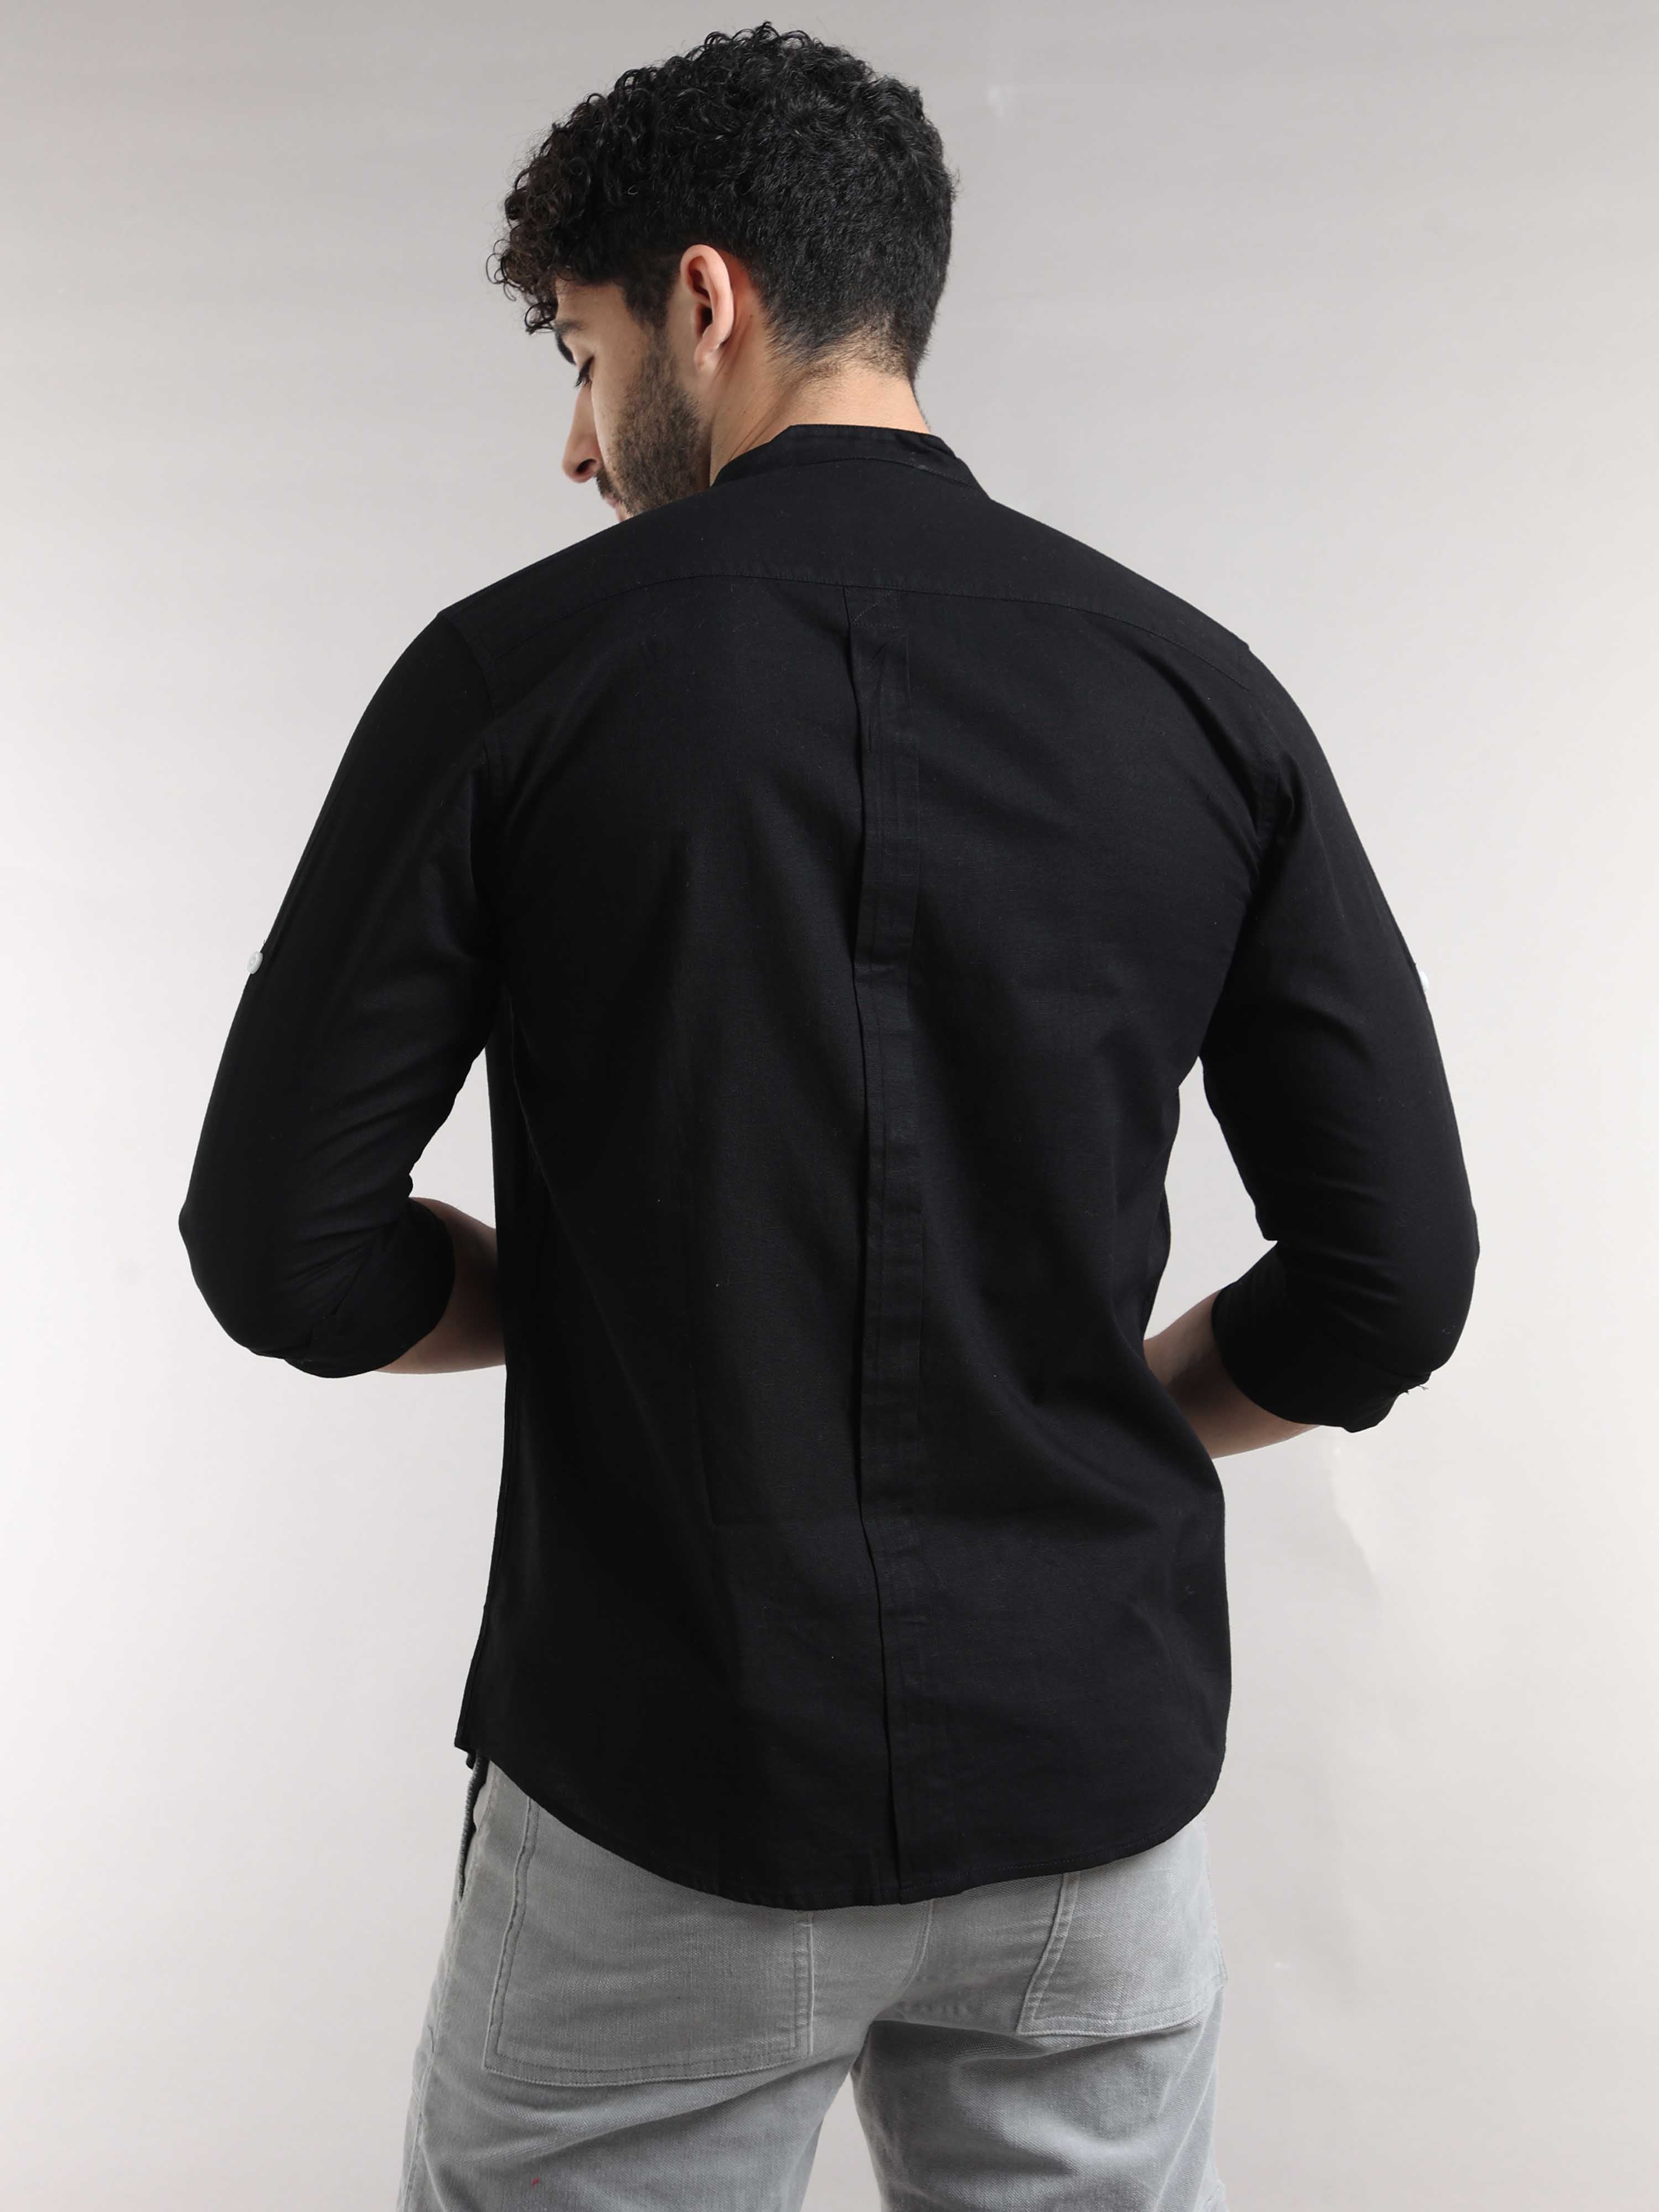 Mens Double Pocket Shirts | Chinese Collar Shirt For MenRs. 1399.00